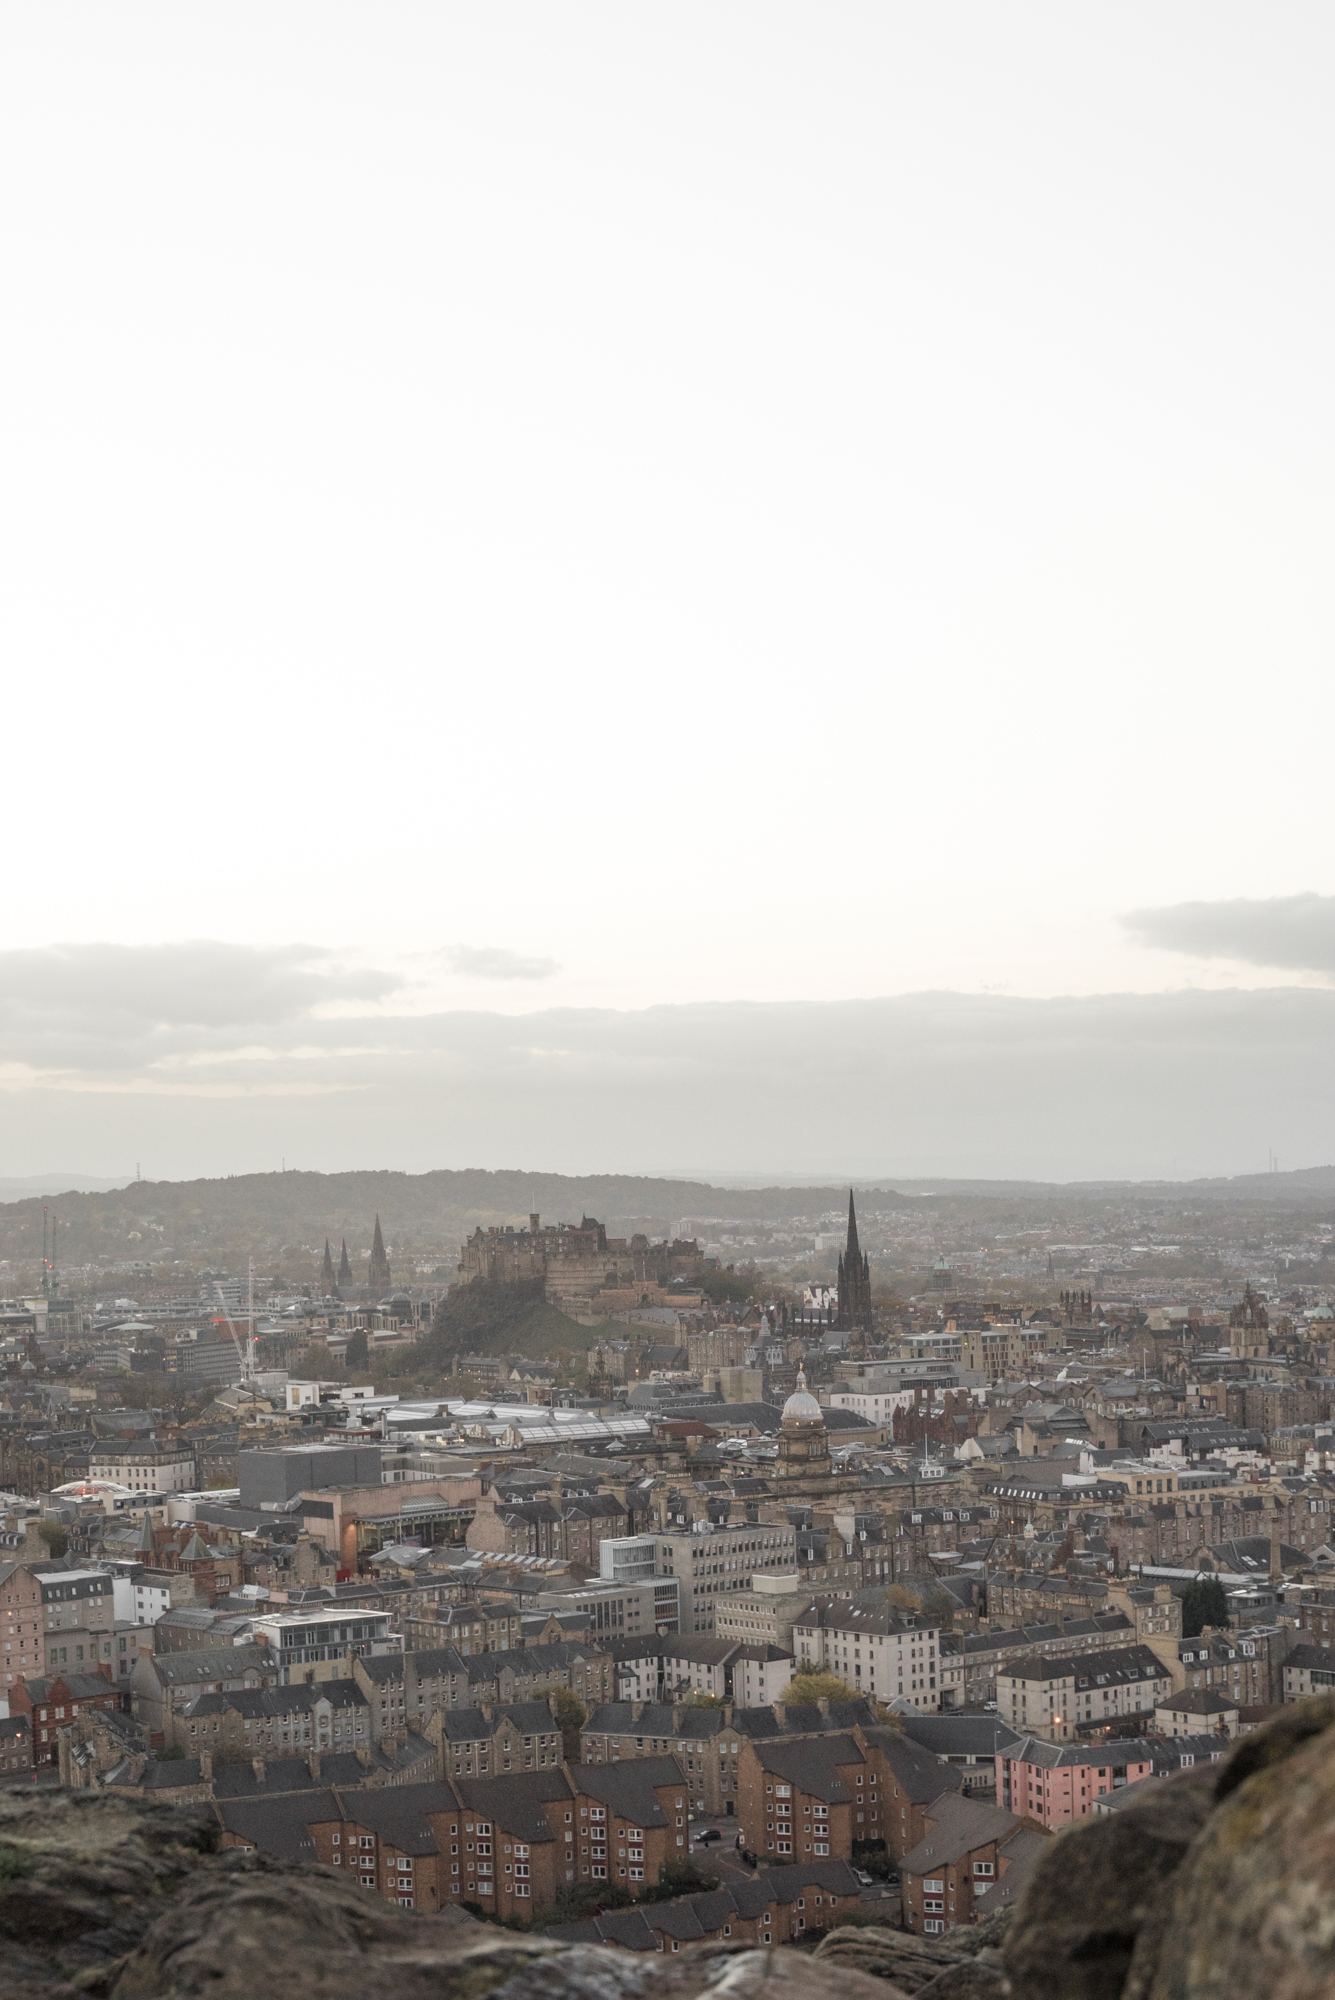 View on Edinburgh's castle, from afar